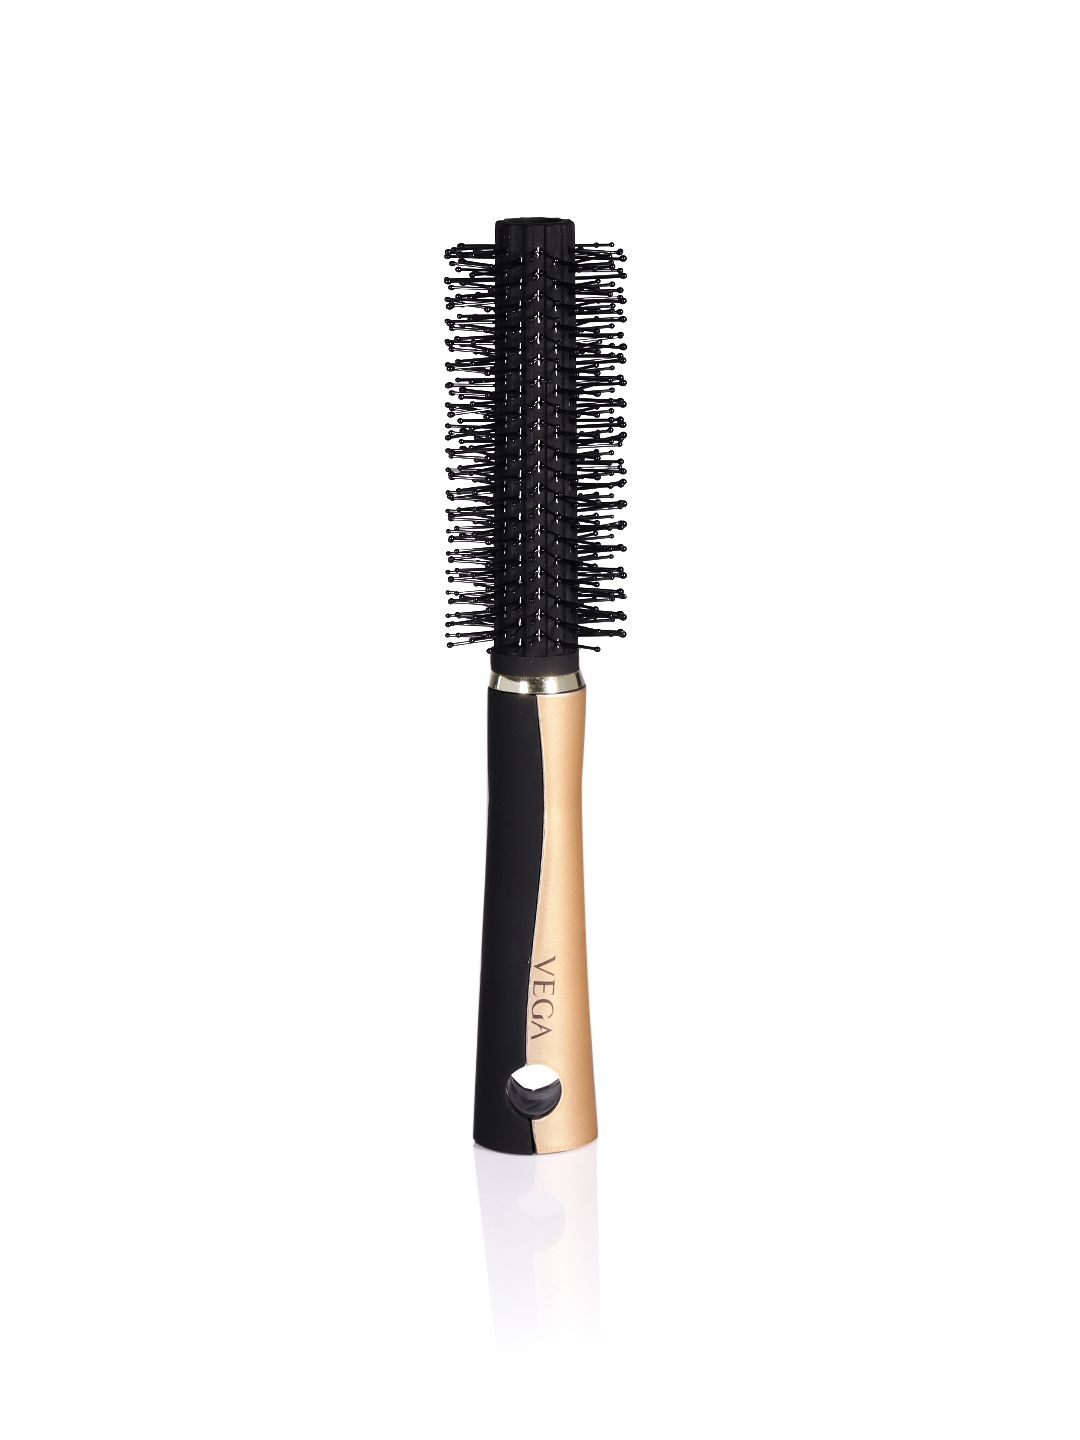 VEGA Unisex Black & Gold-Toned Round Hair Brush E12-RB Price in India